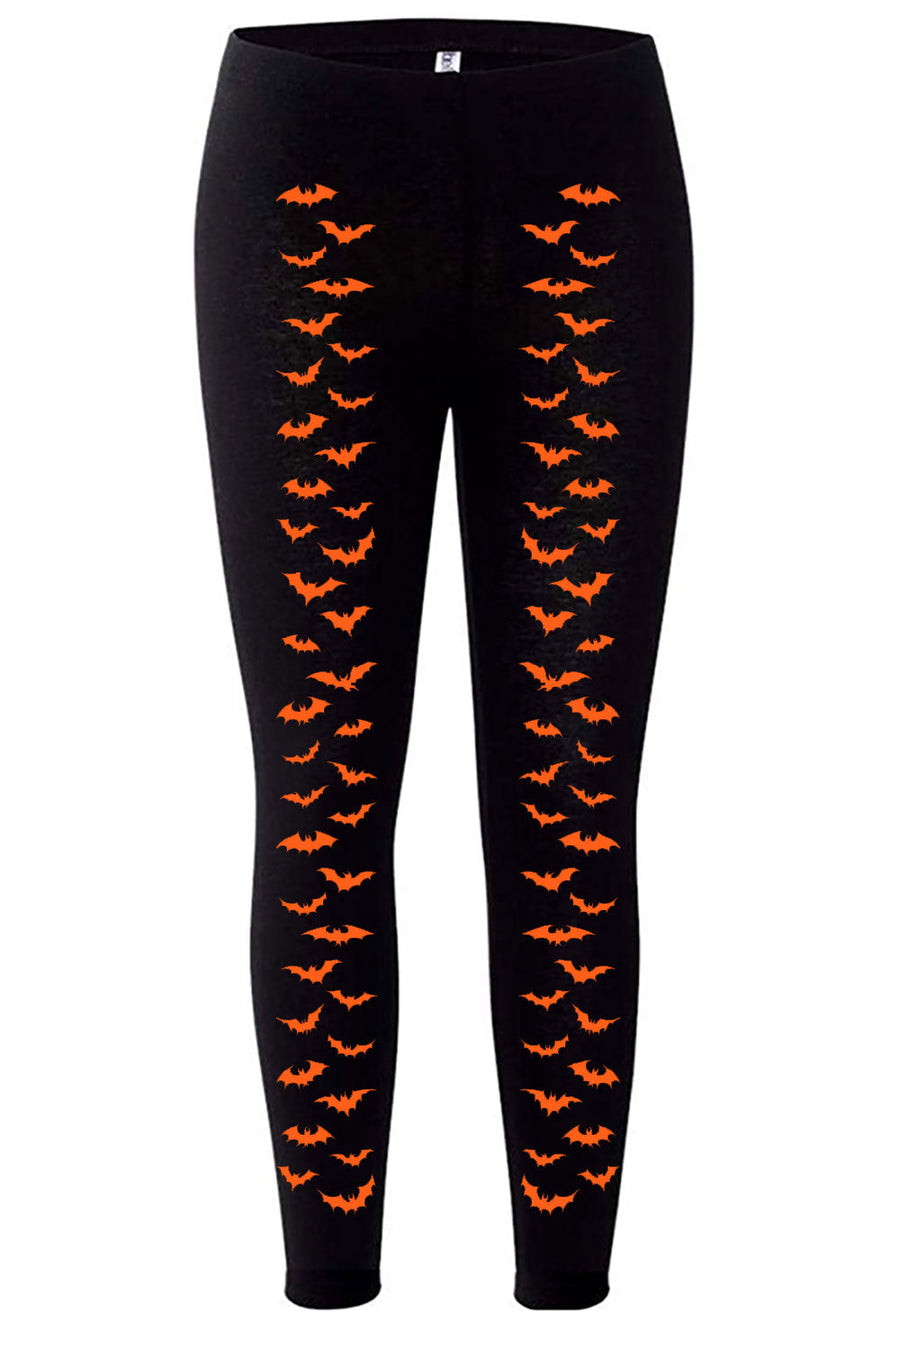 orange bat leggings